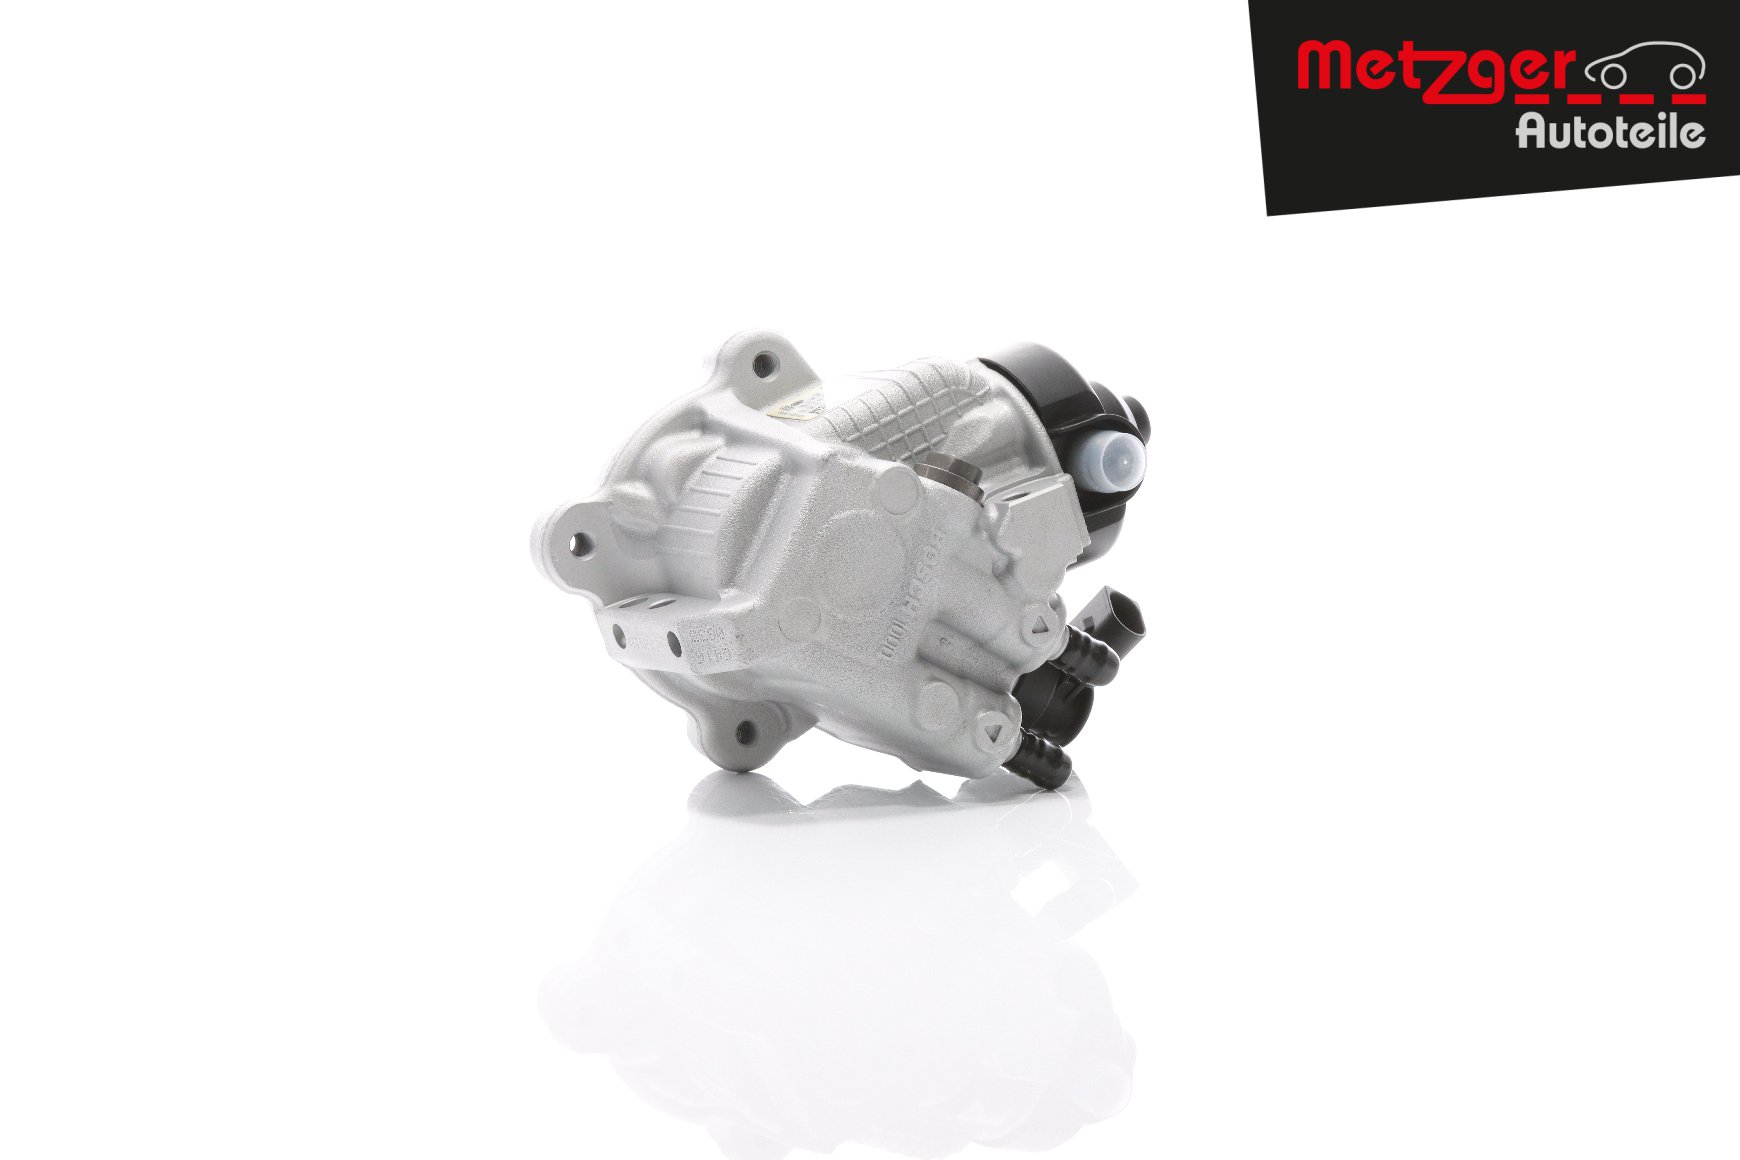 METZGER ORIGINAL ERSATZTEIL 0830001 High pressure fuel pump Tiguan Mk1 2.0 TDI 4motion 170 hp Diesel 2010 price